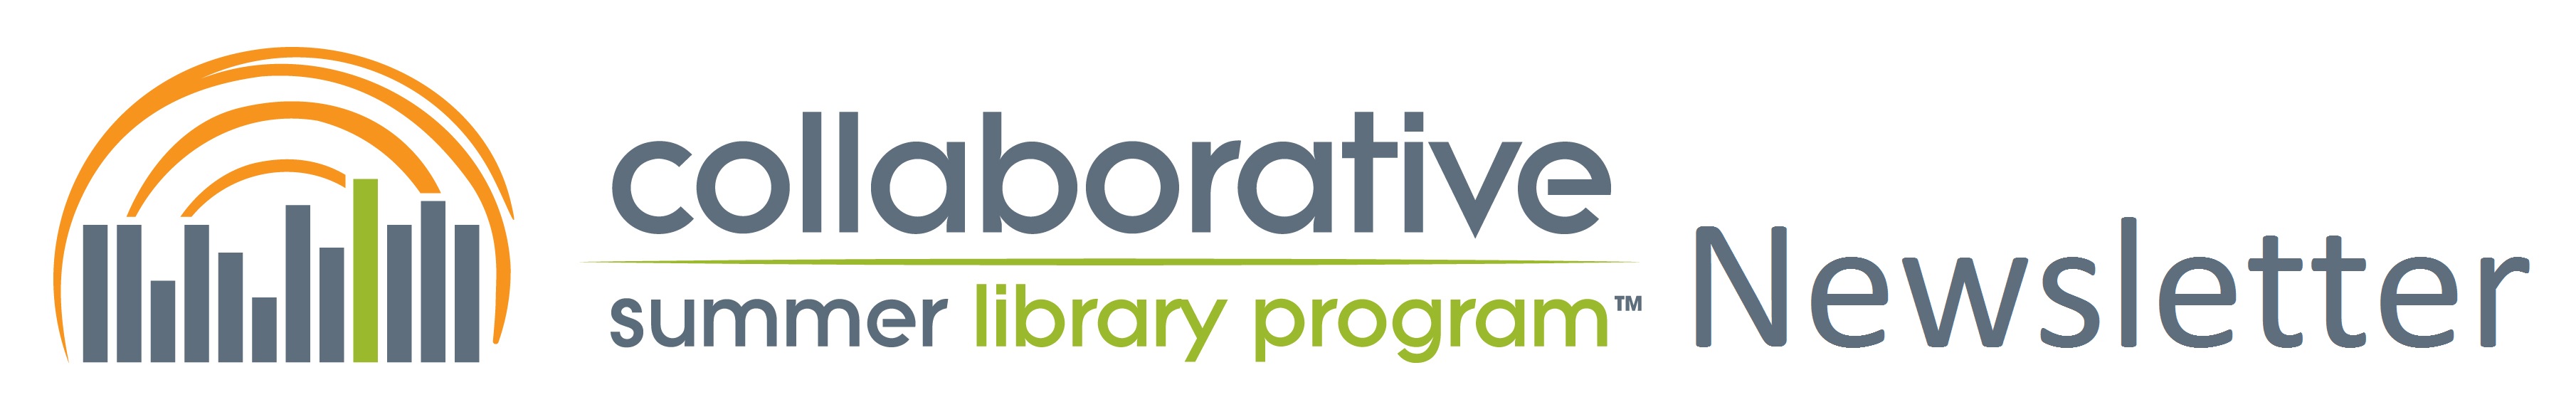 Cslp Newsletter February 2018 Collaborative Summer Library Program - escape the boring library roblox